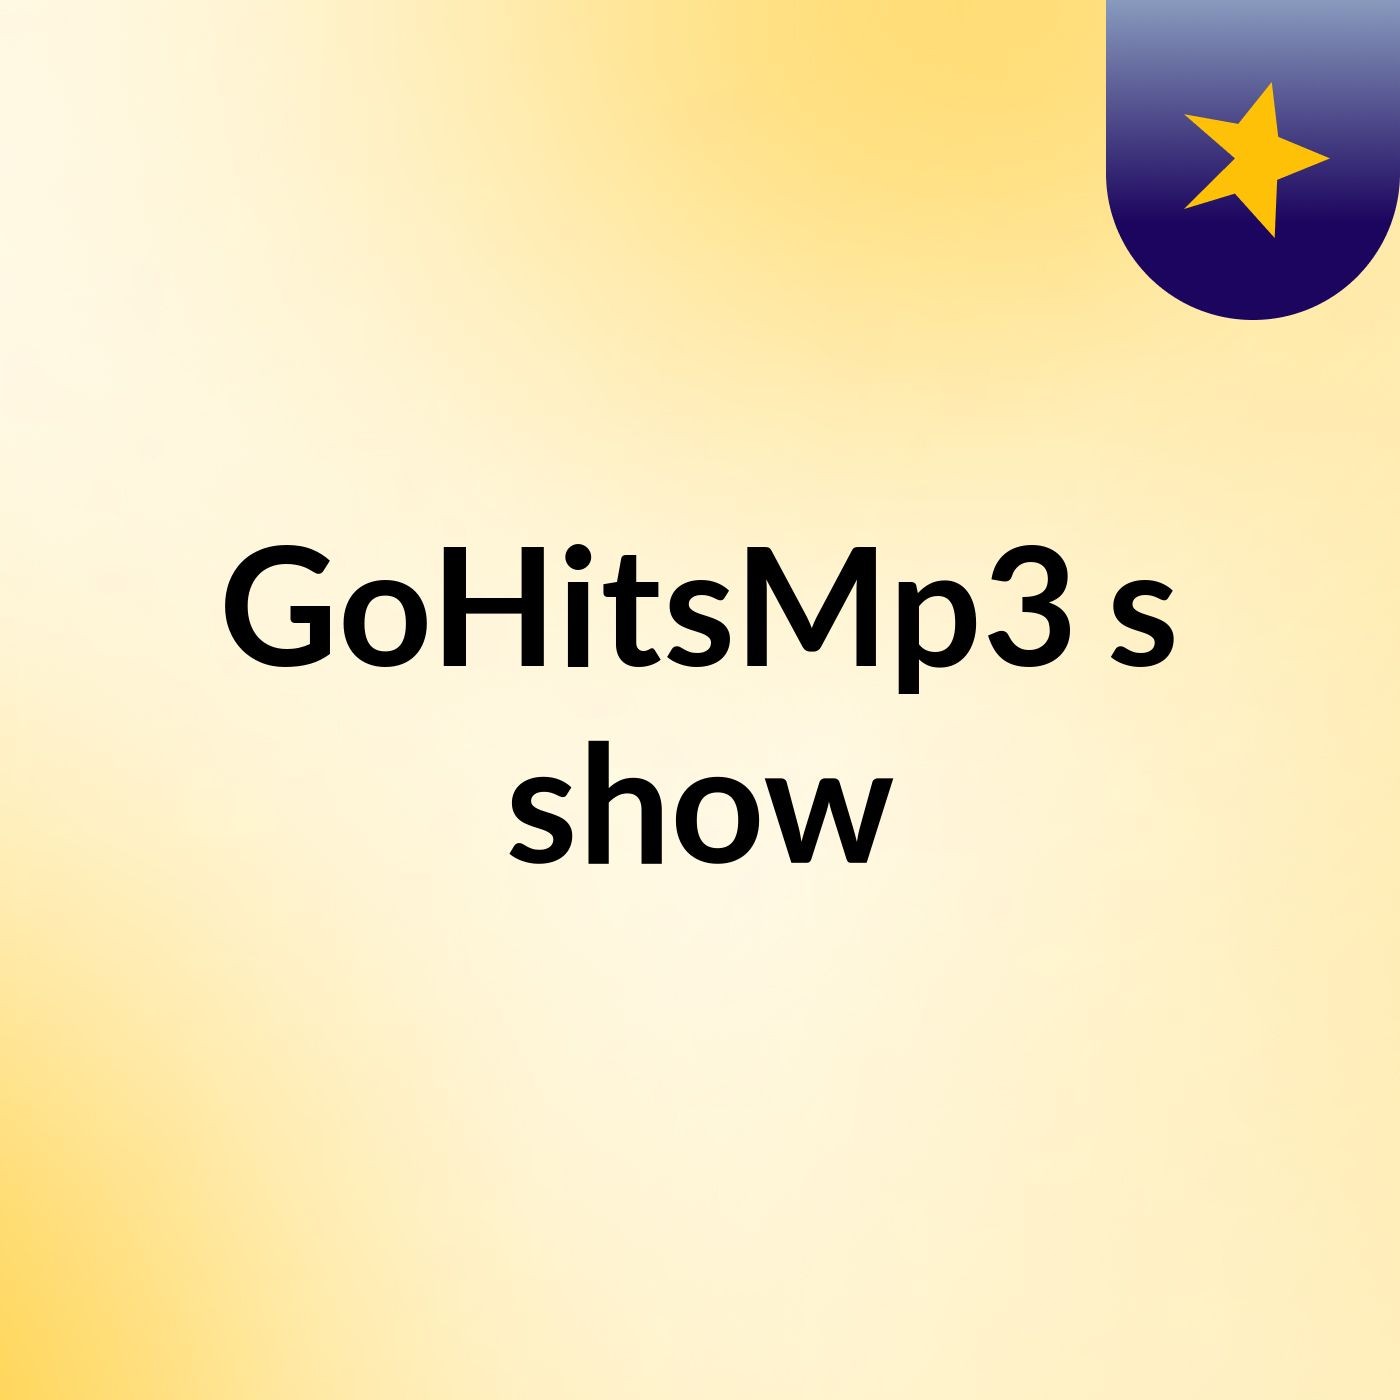 GoHitsMp3's show